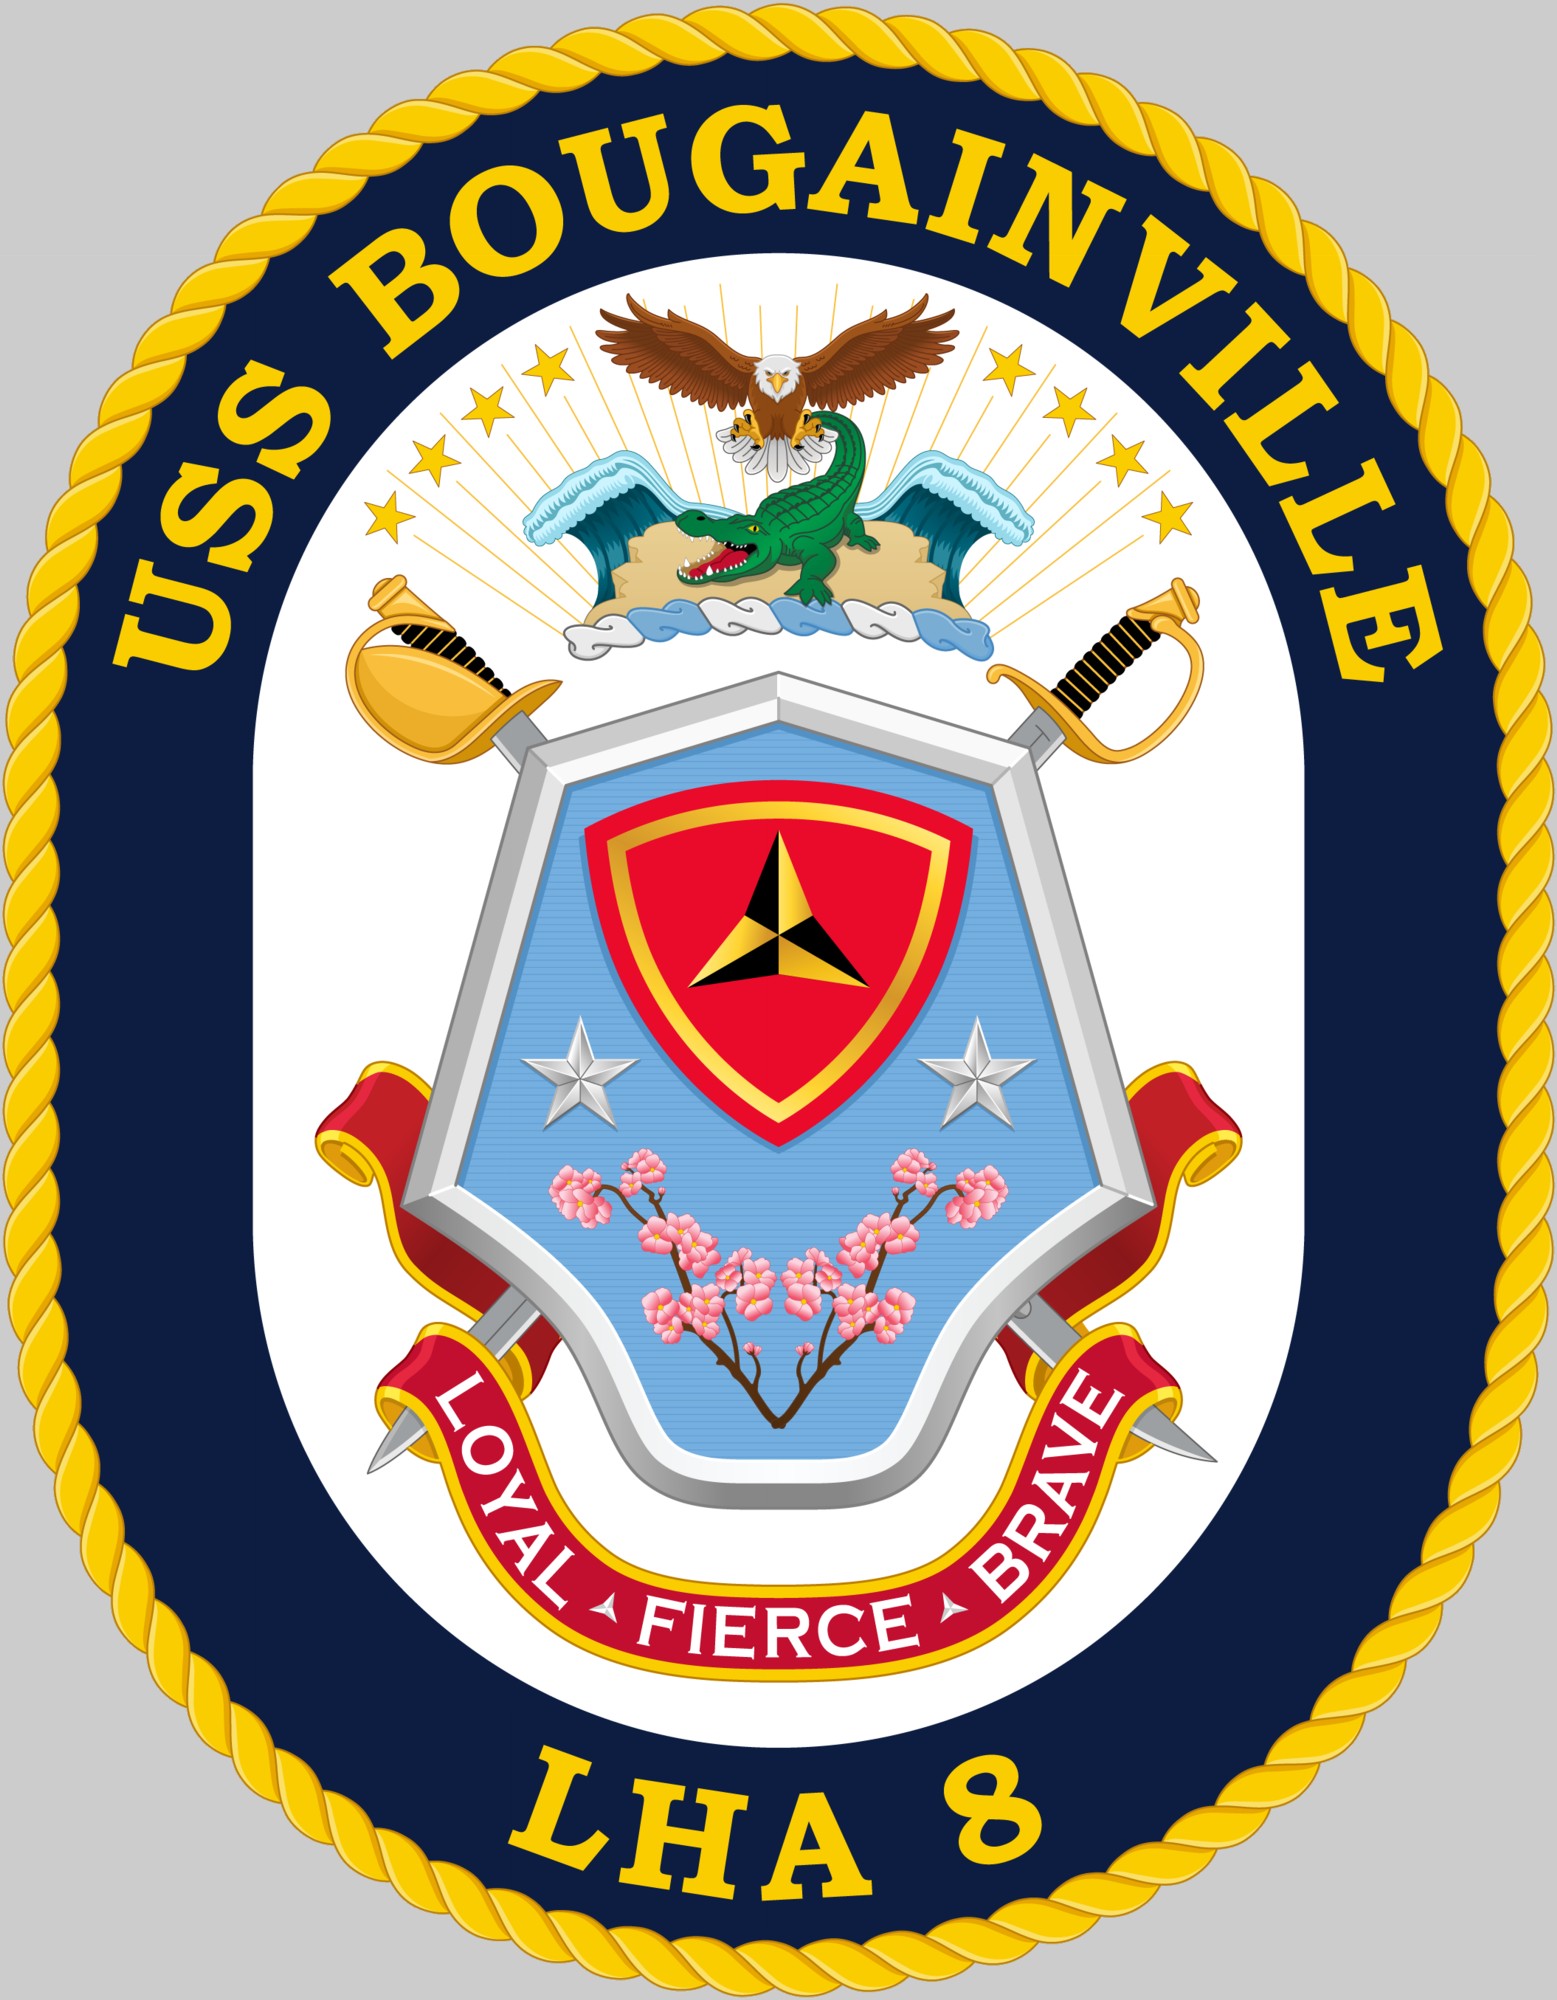 lha-8 uss bougainville insignia crest patch badge amphibious assault ship us navy 02c